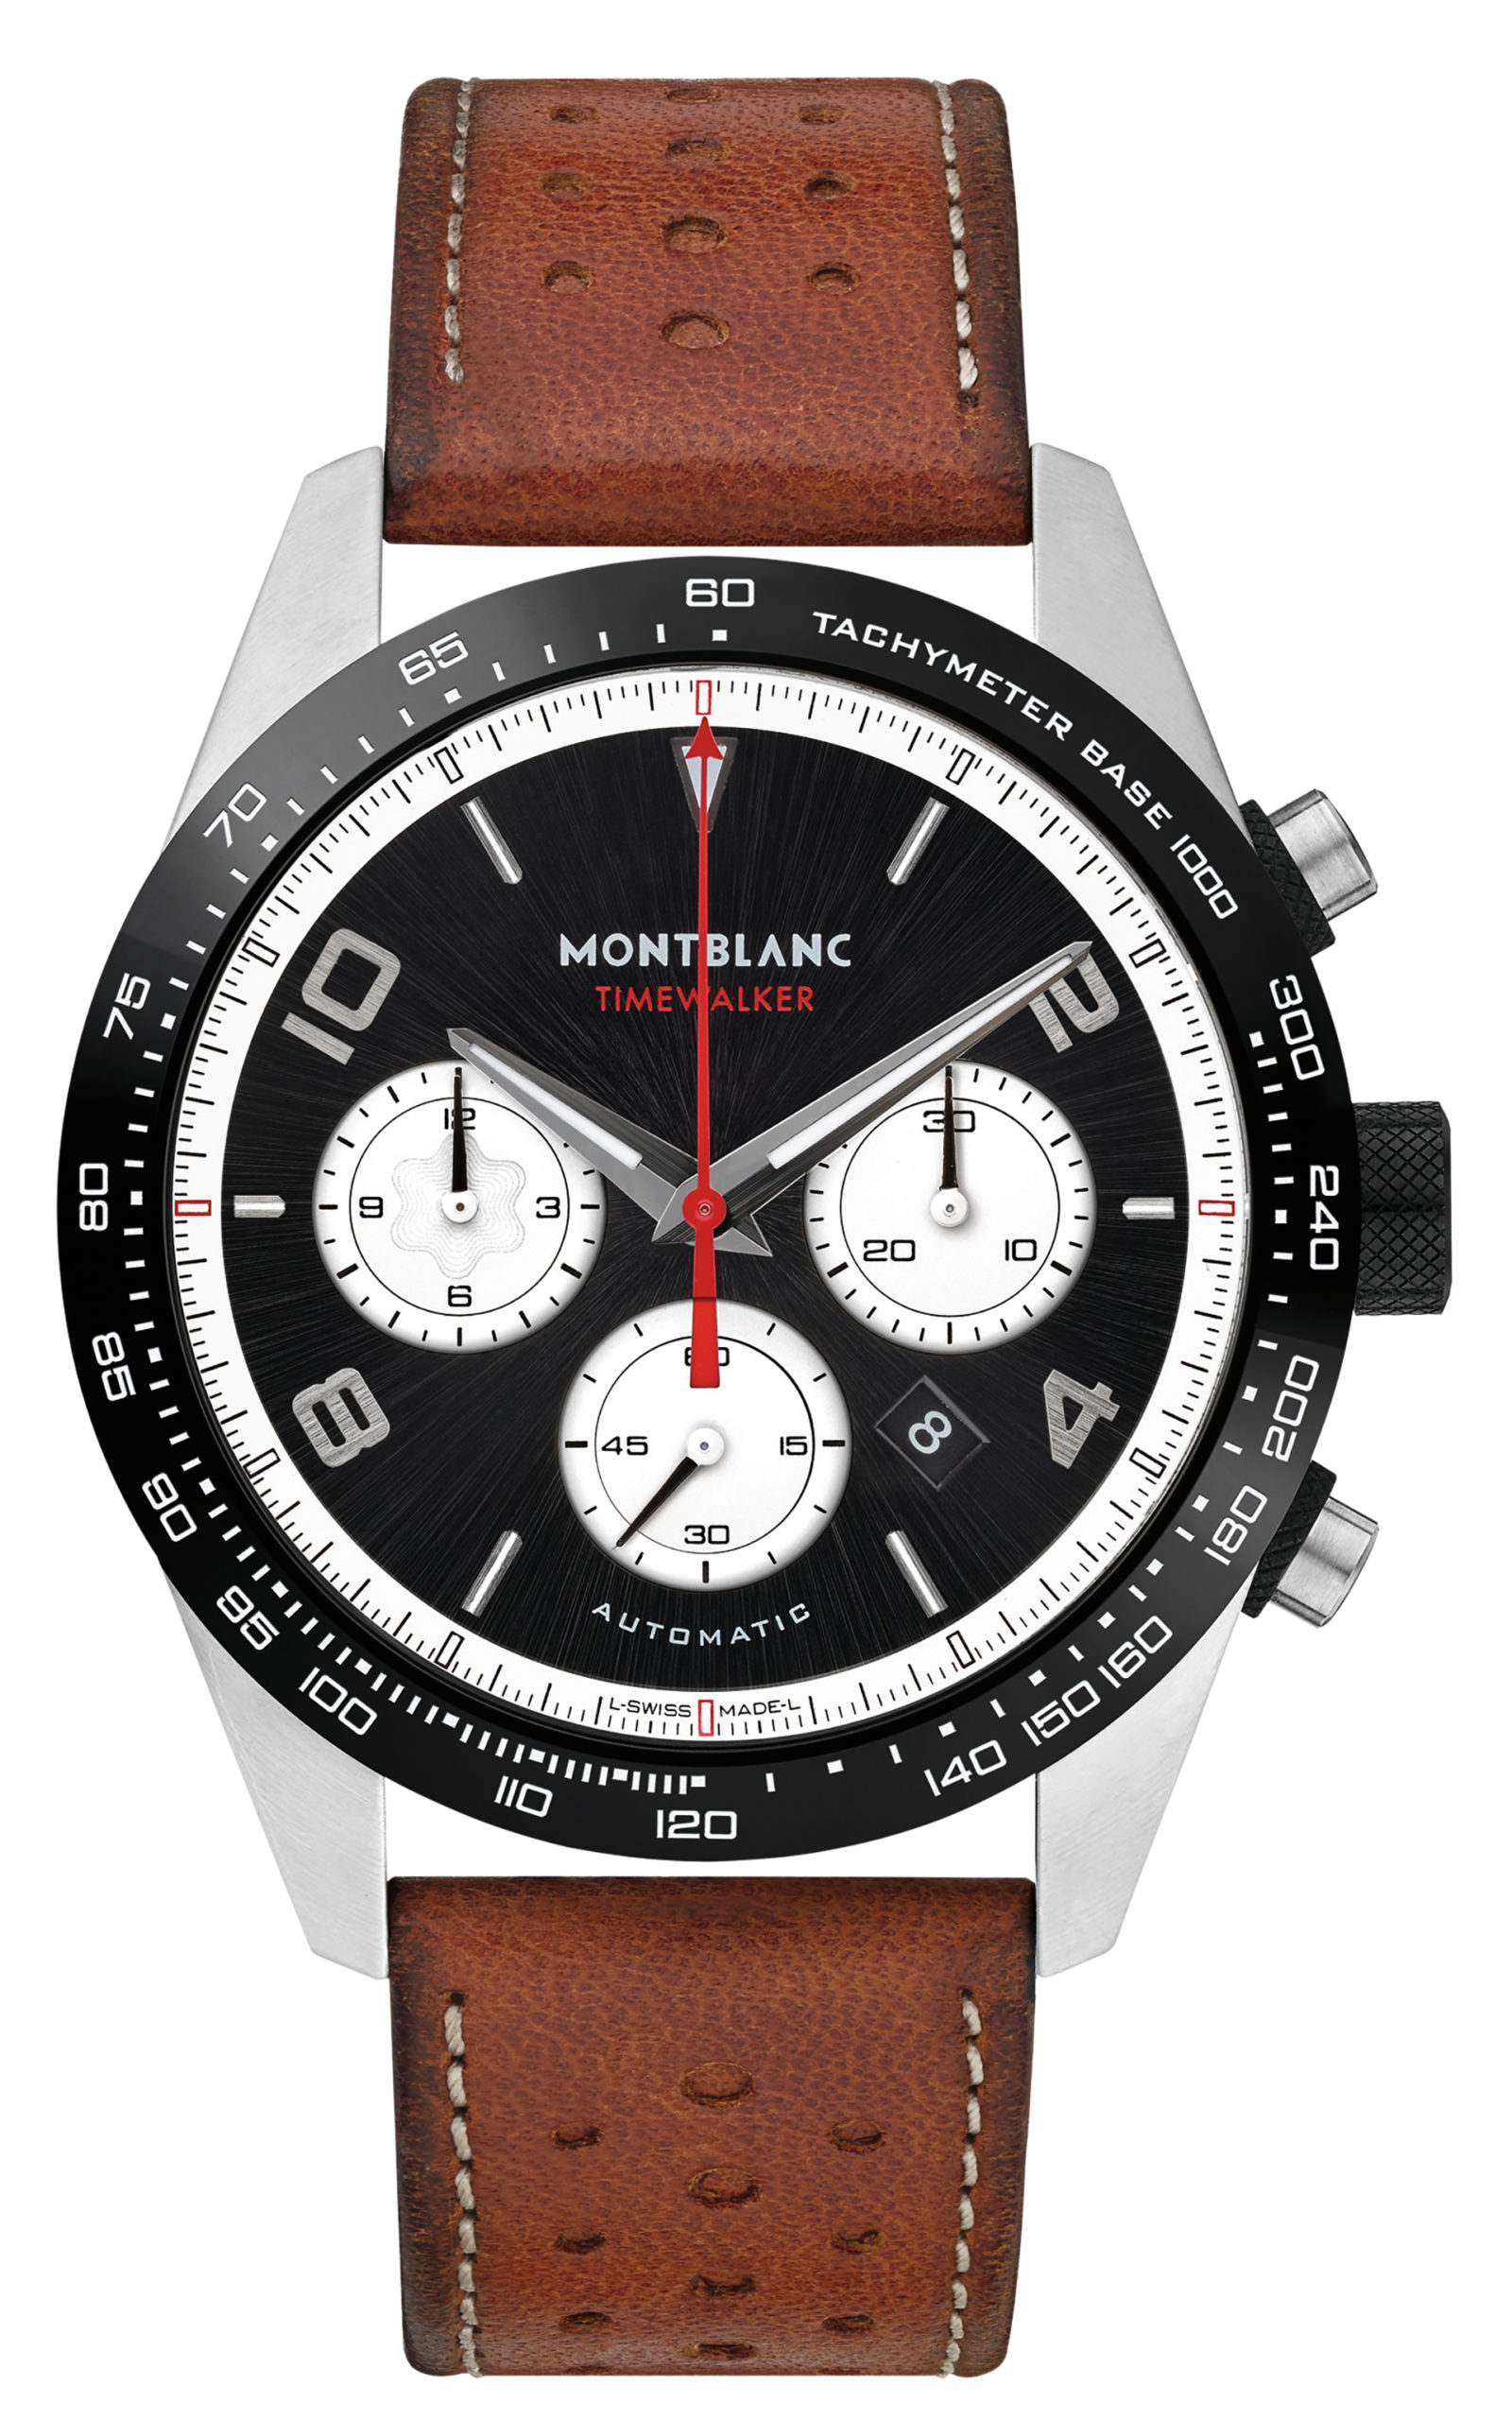 Montblanc TimeWalker Manufacture Chronograph